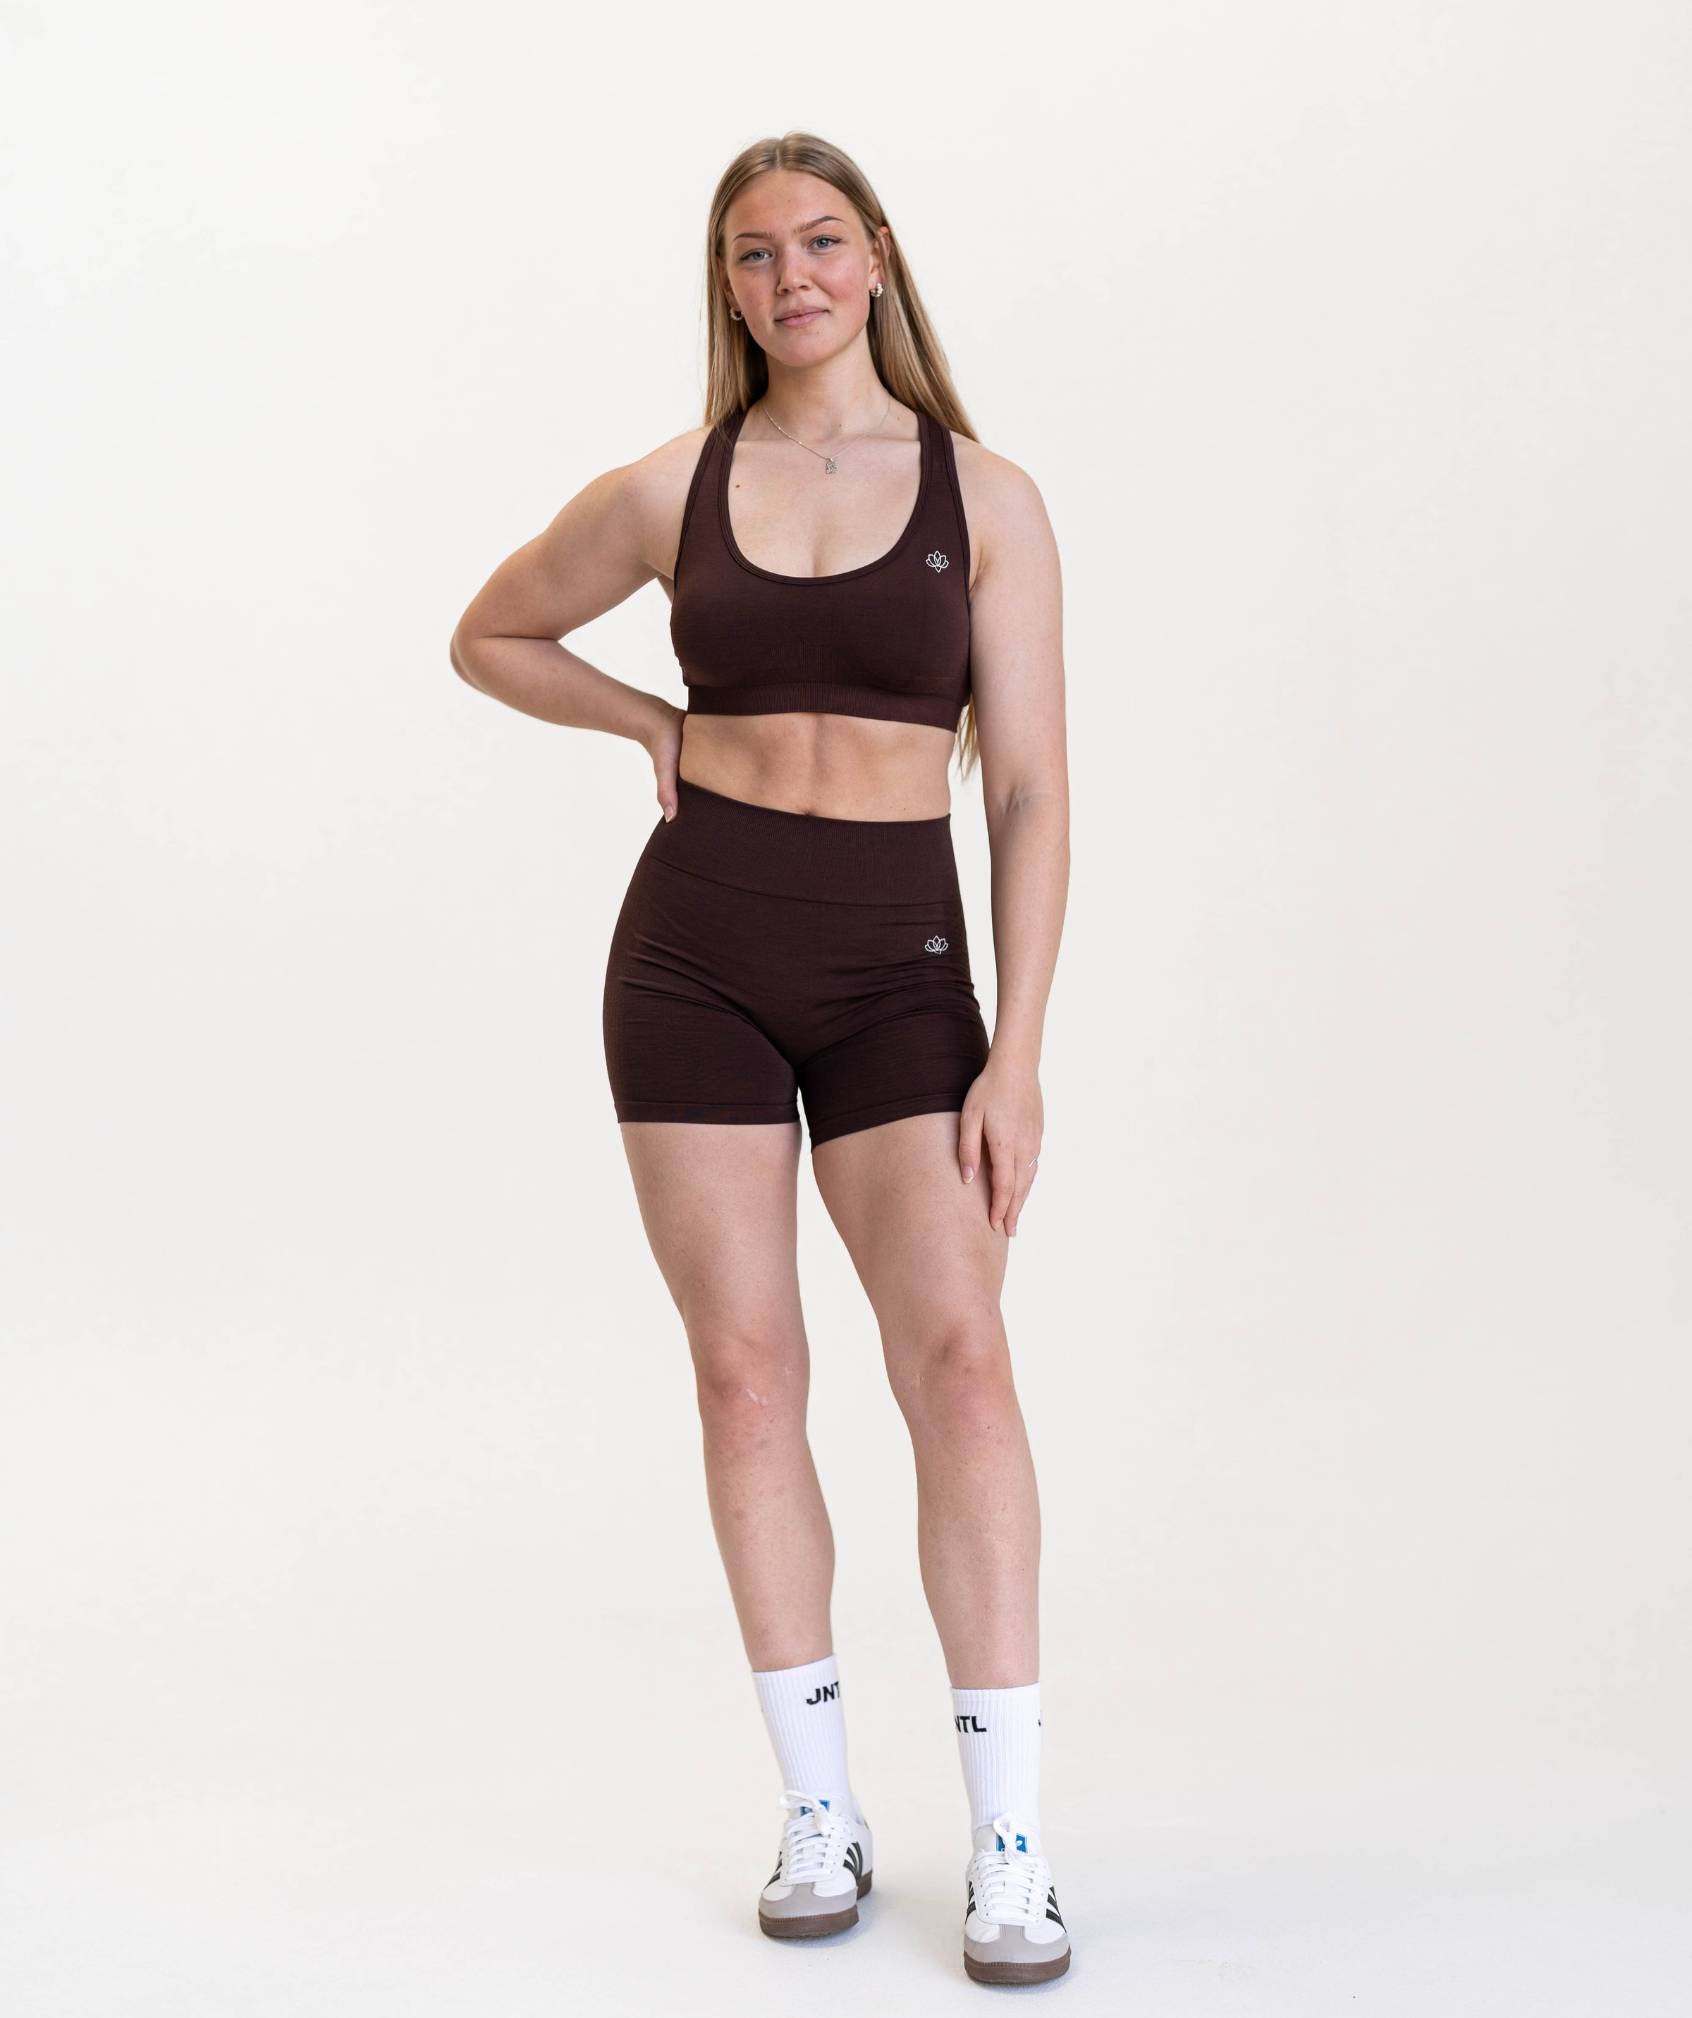 Jentle - Arise Shorts (Brown)